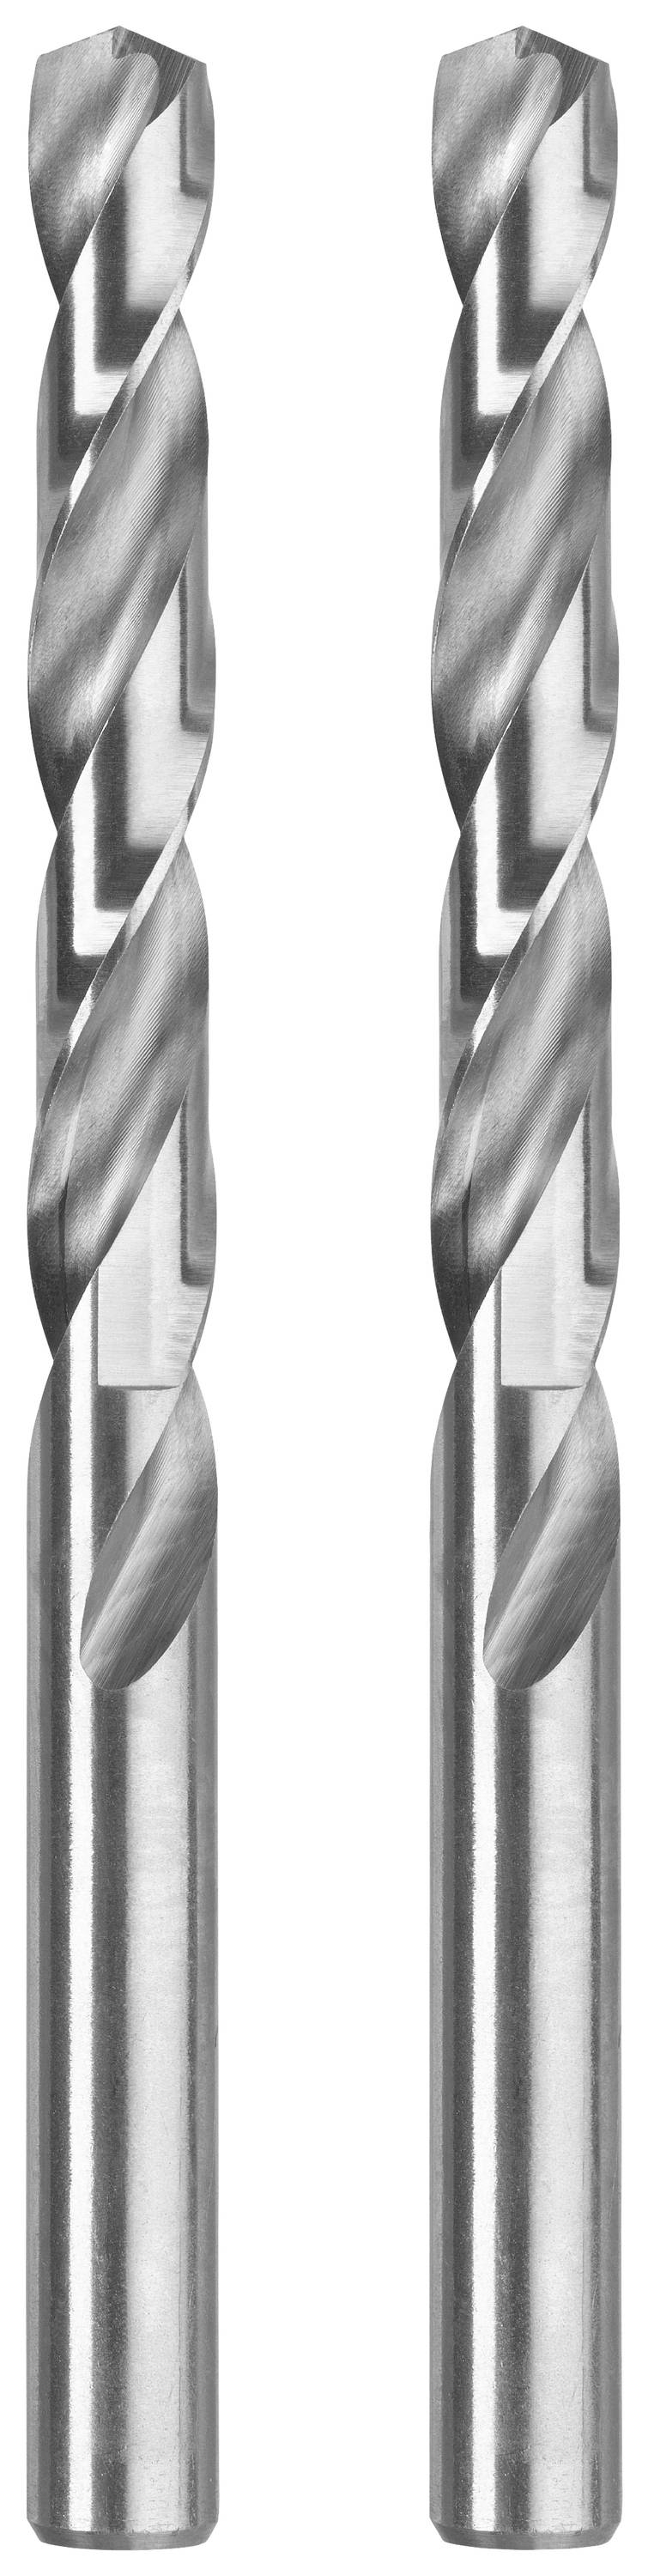 KWB 206530 Metall-Spiralbohrer 3 mm 1 St.